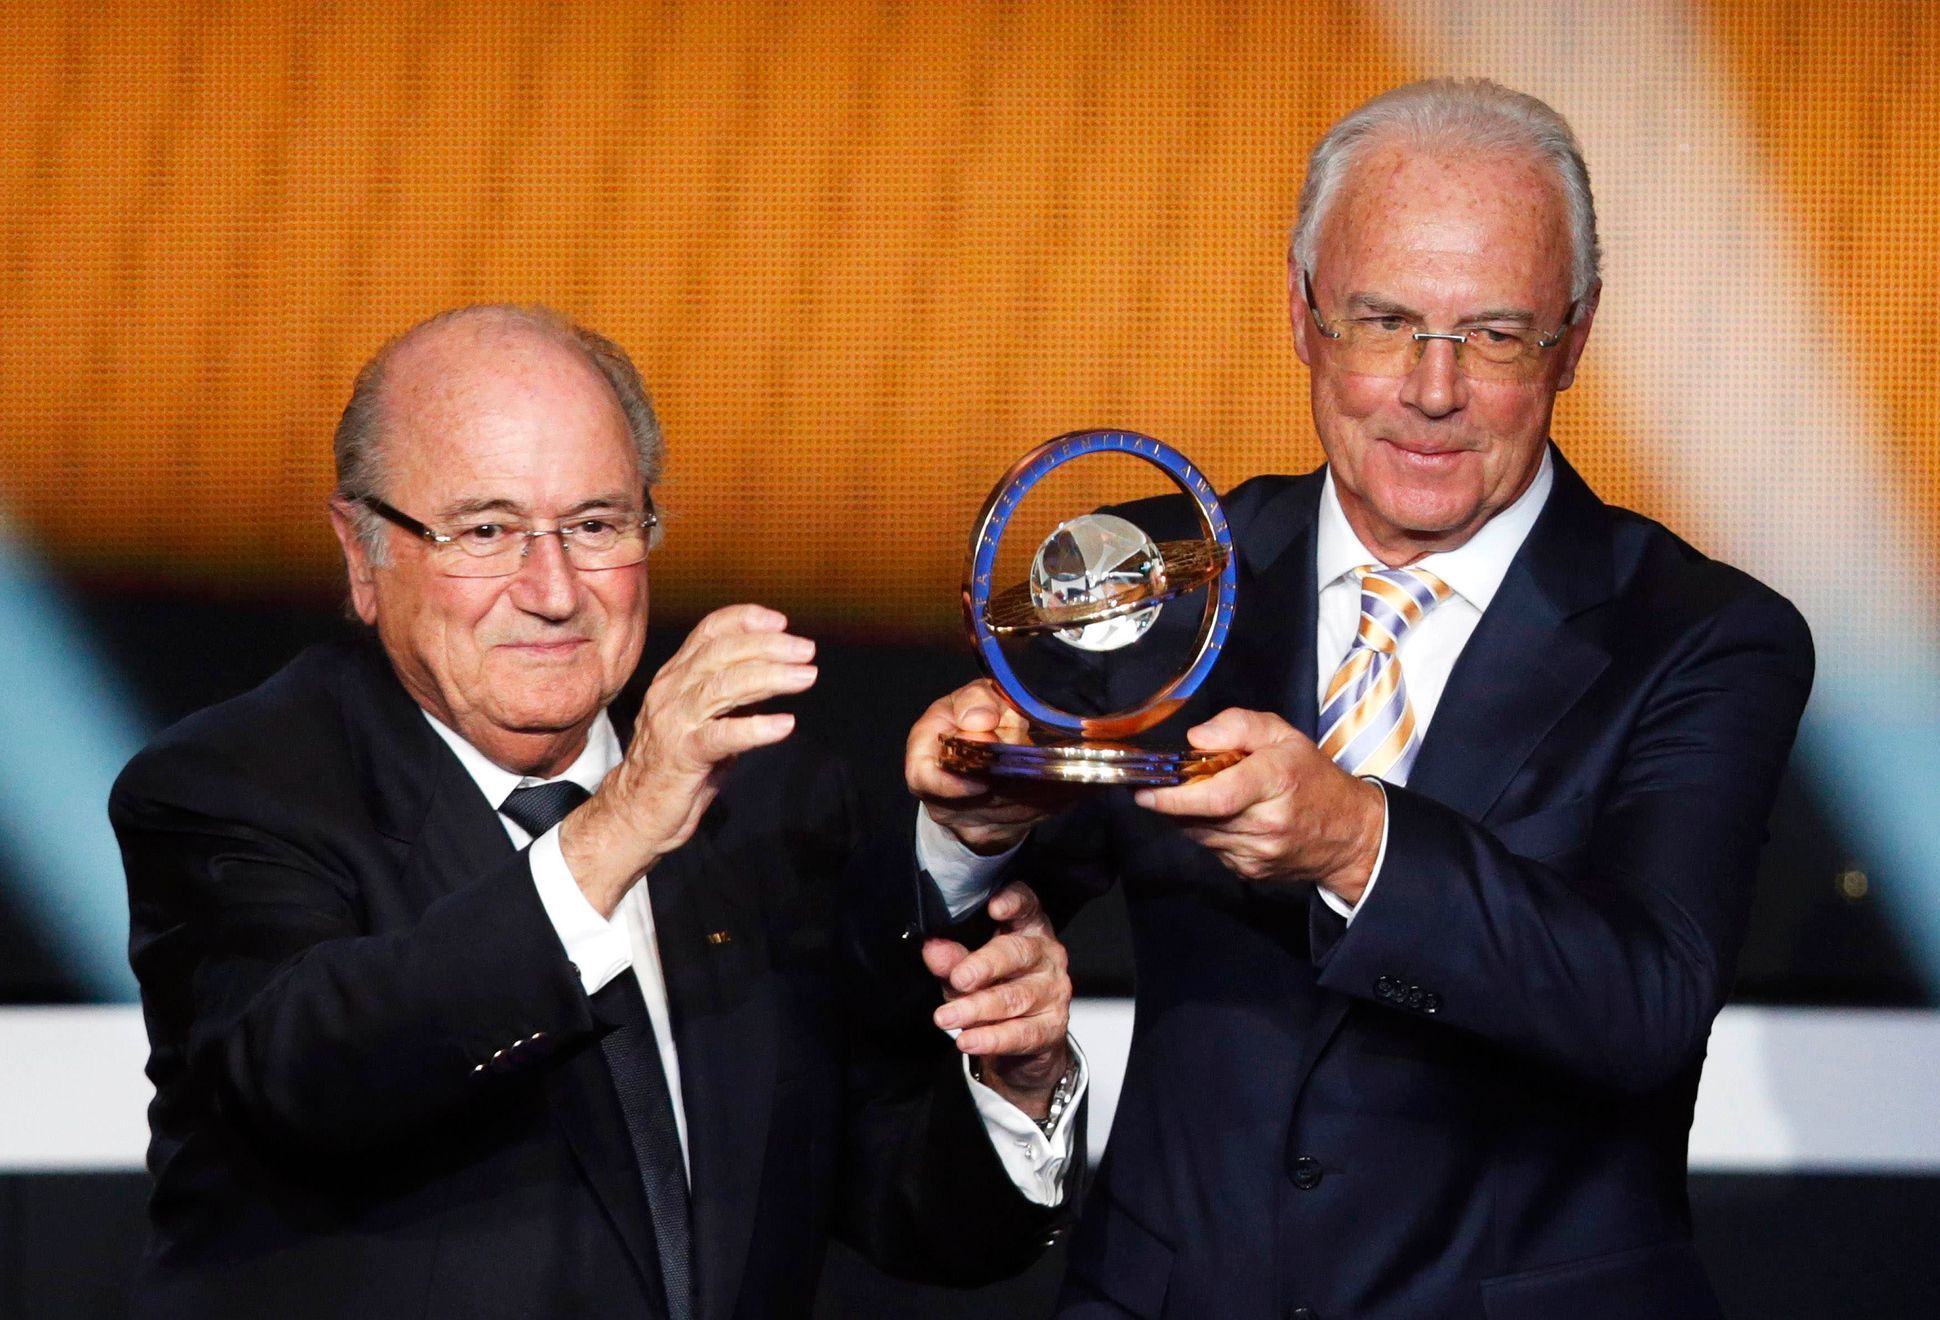 Galavečer FIFA - Zlatý míč pro rok 2012: Sepp Blatter a Franz Beckenbauer